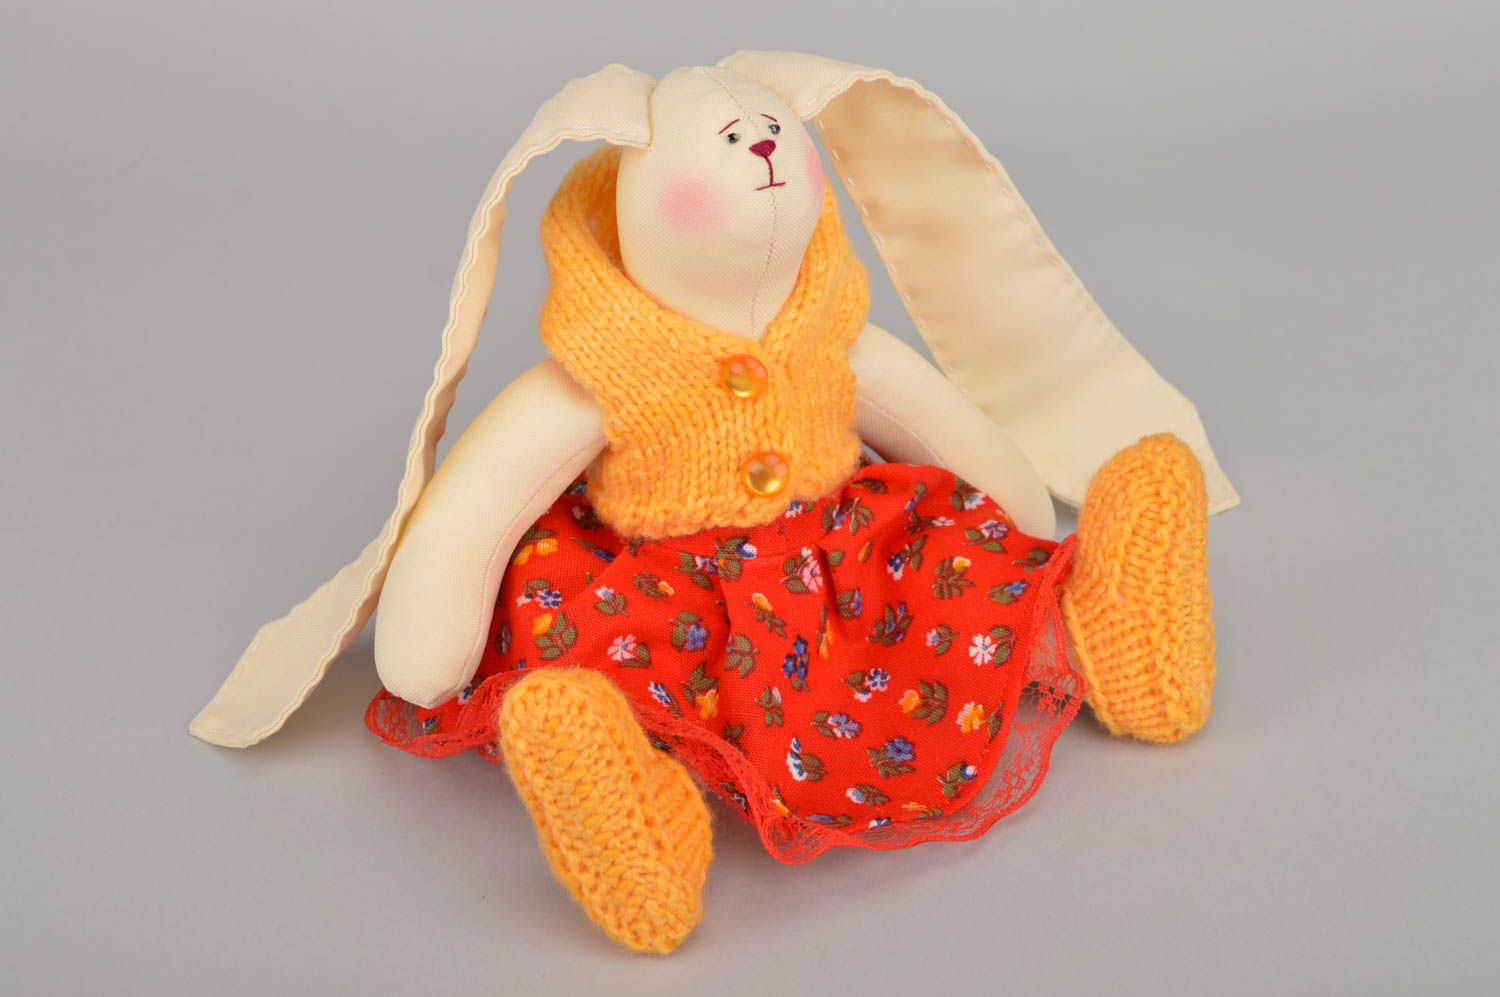 Unusual handmade childrens soft toy textile toy for kids interior design ideas photo 5